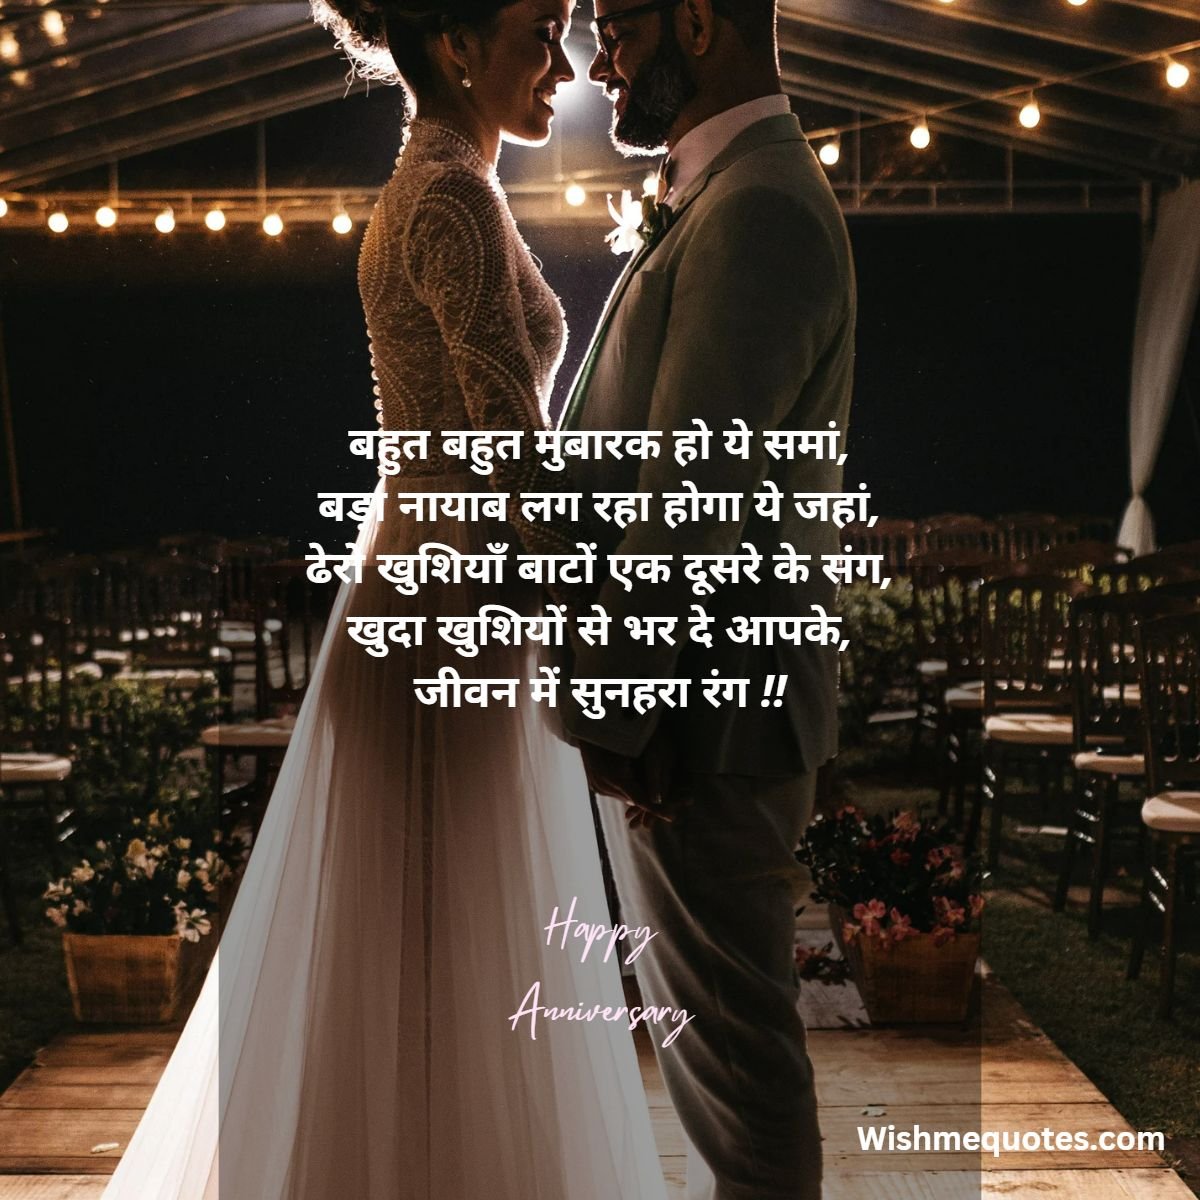 Anniversary Wishes in Hindi